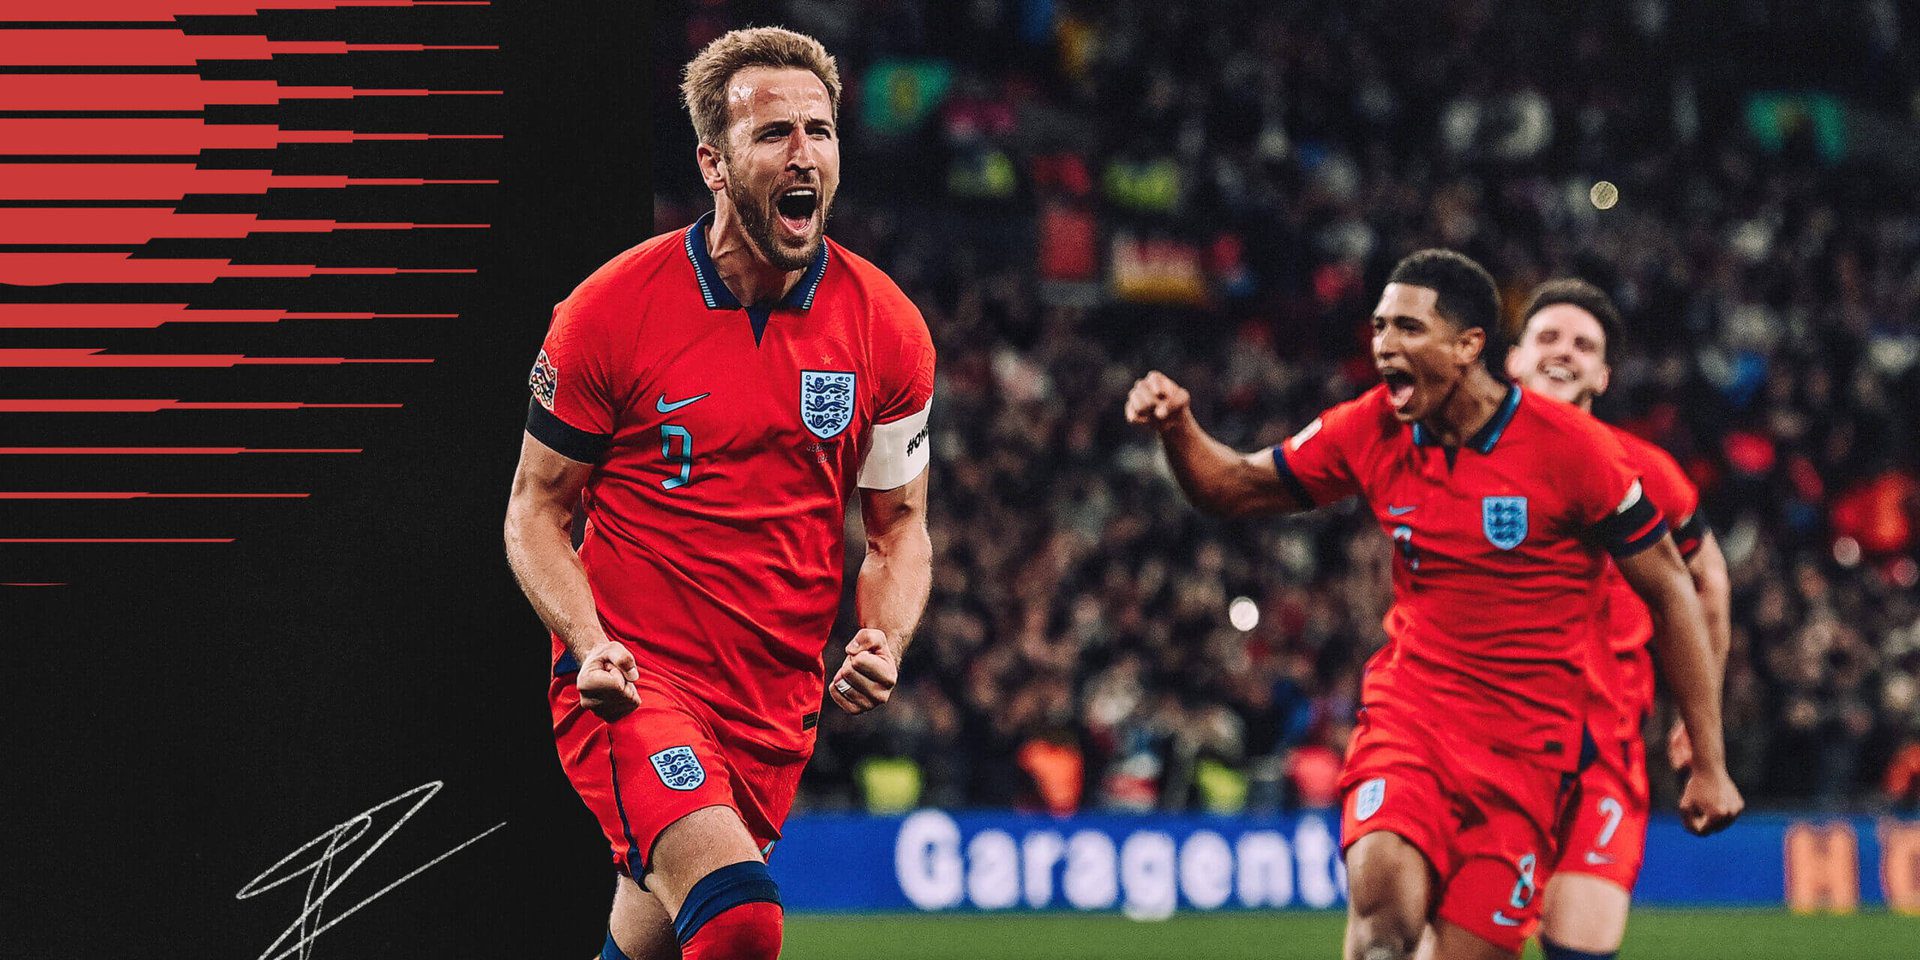 Panduan Tim Piala Dunia 2022 Inggris: Southgate akan tetap berpegang pada pengalaman tepercaya - baik atau buruk